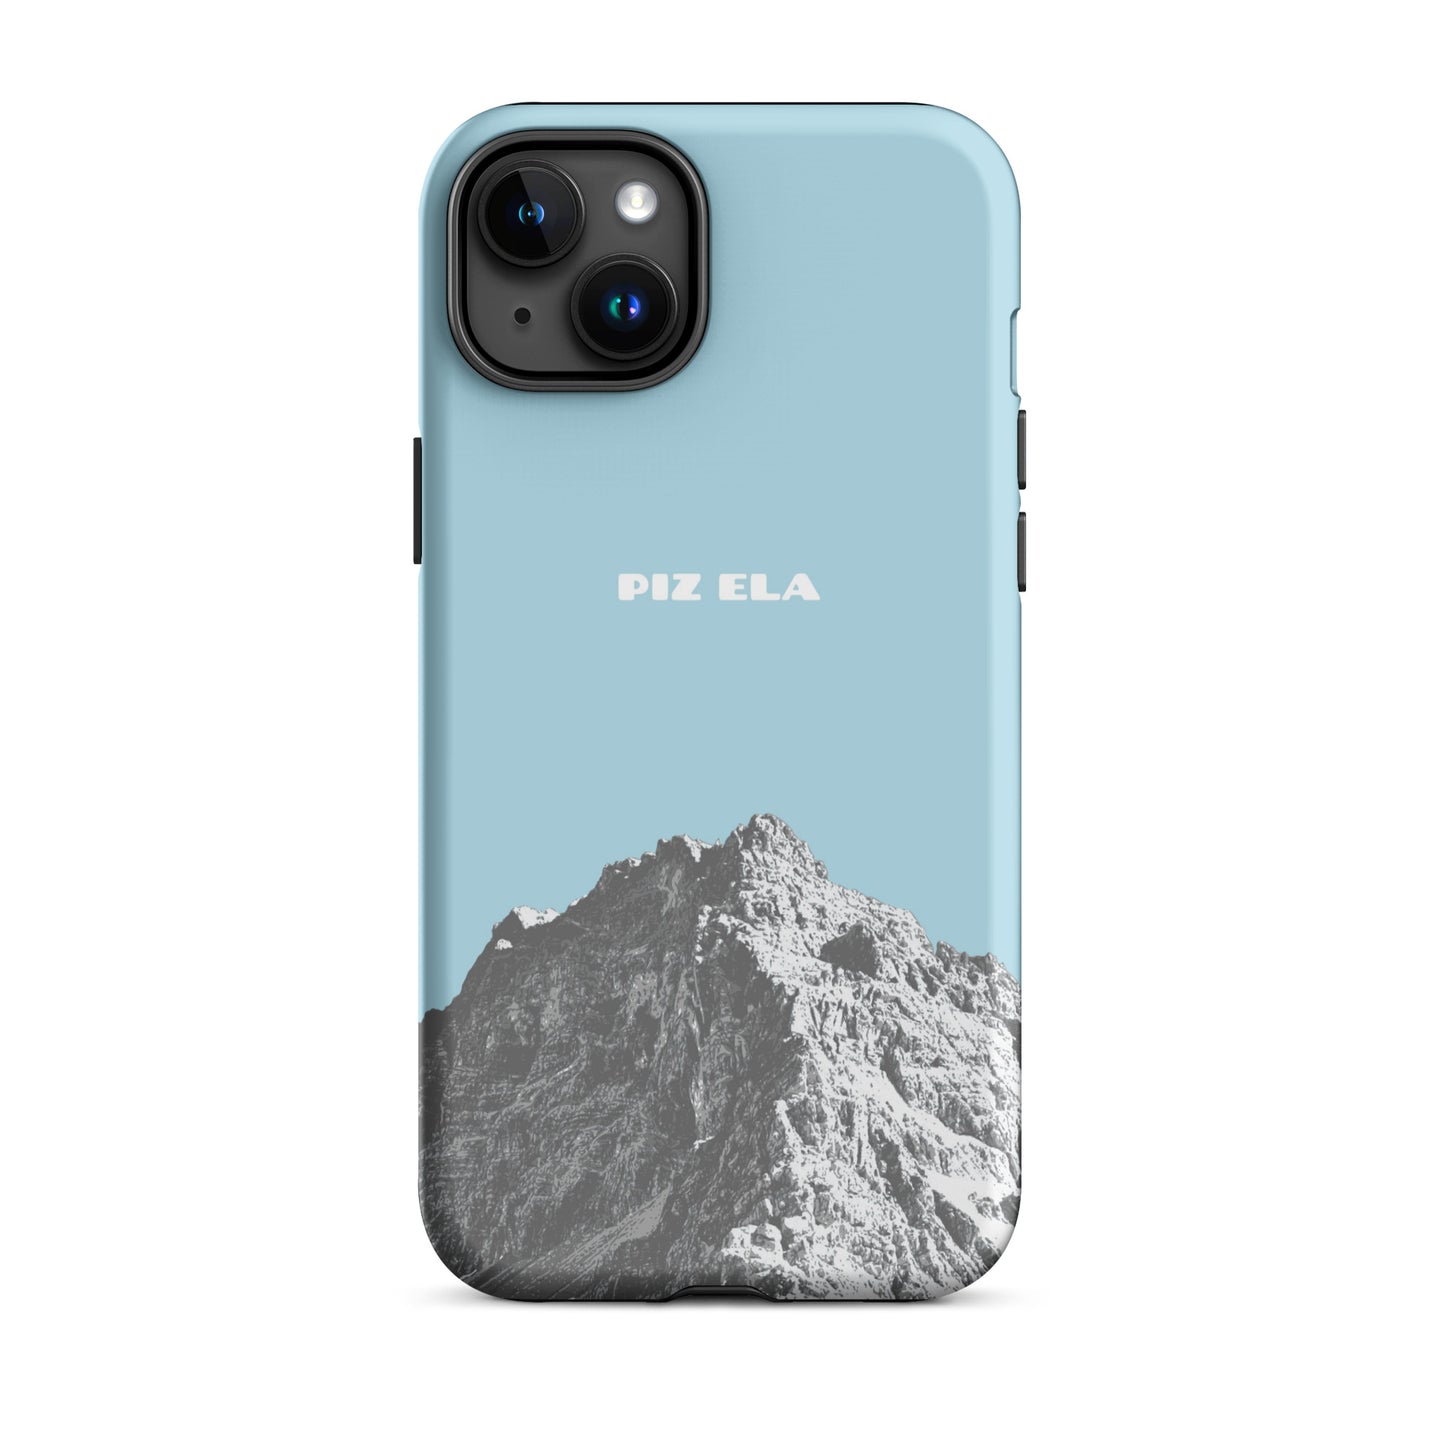 iPhone Case - Piz Ela - Hellblau